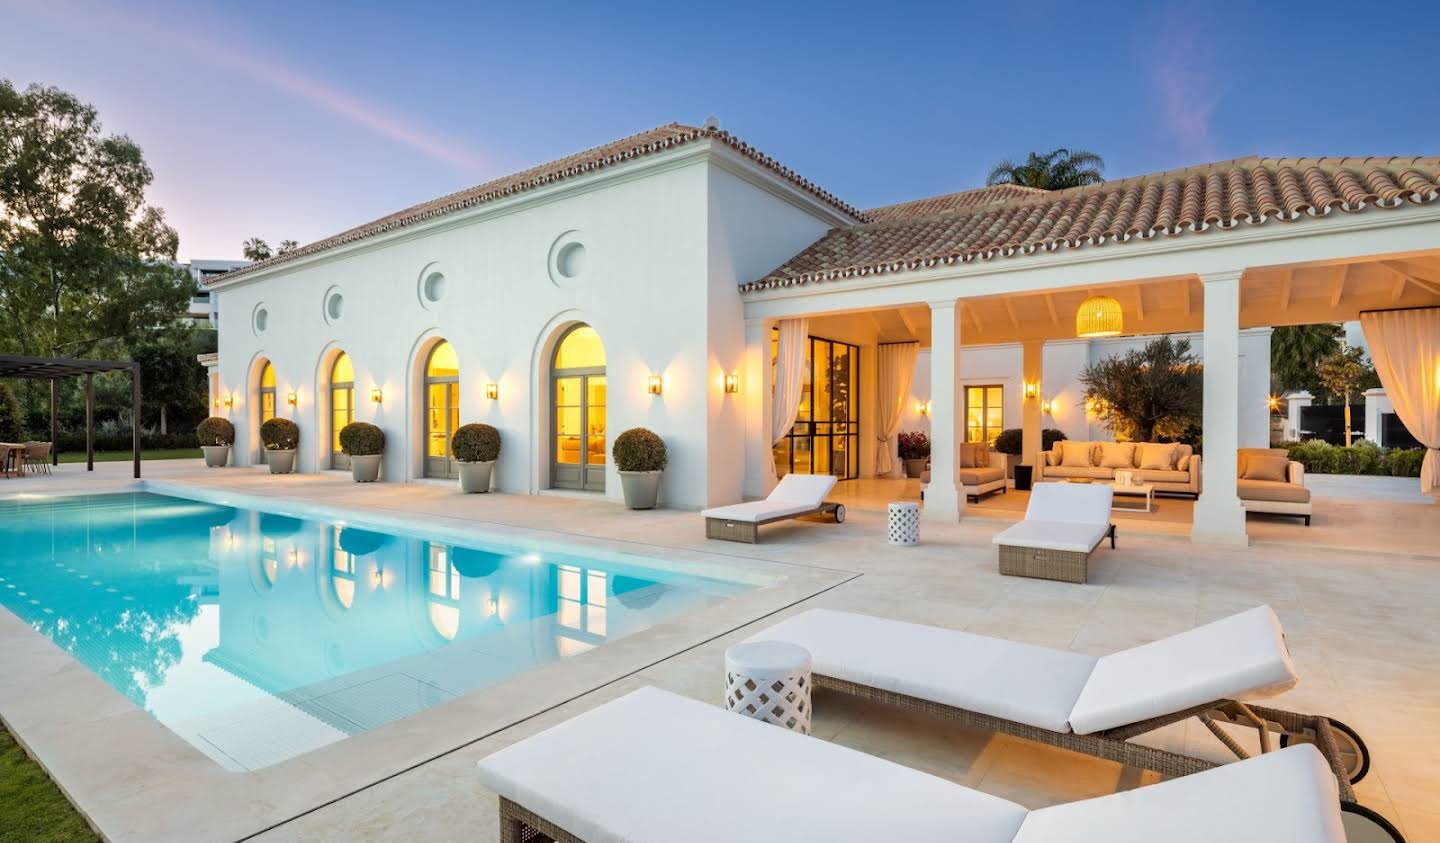 Villa with pool and garden Marbella